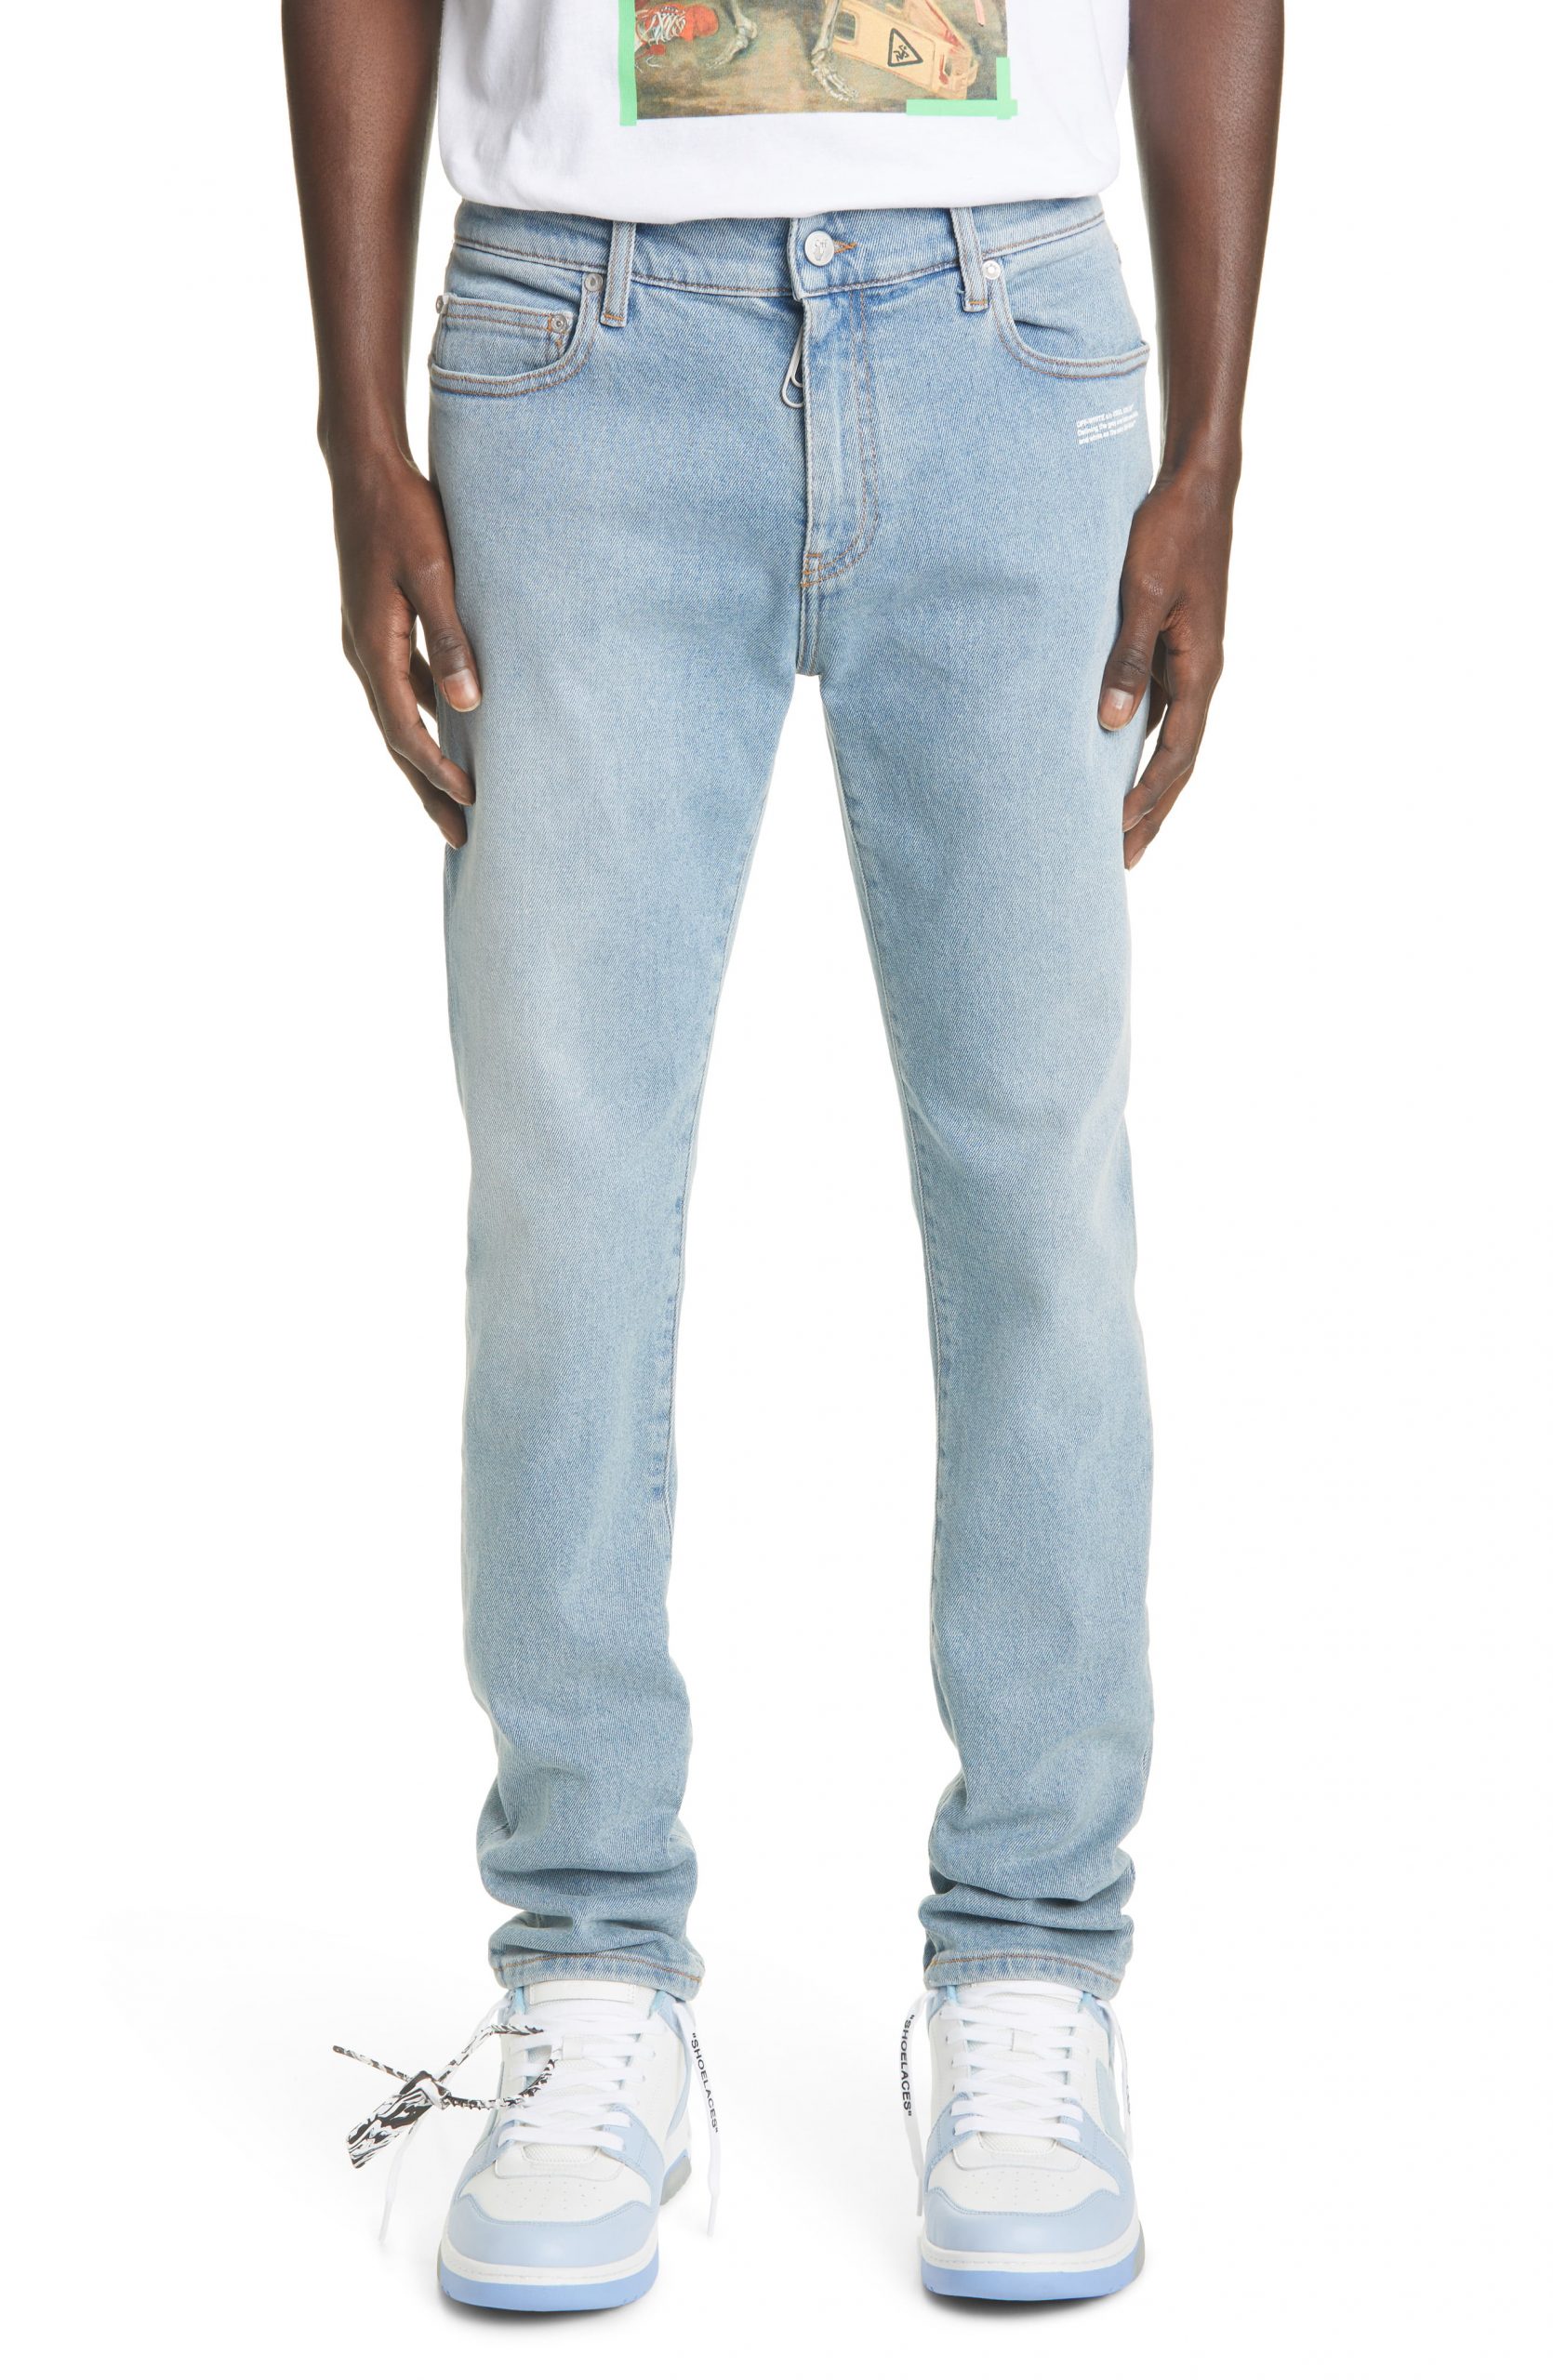 mens white slim fit stretch jeans